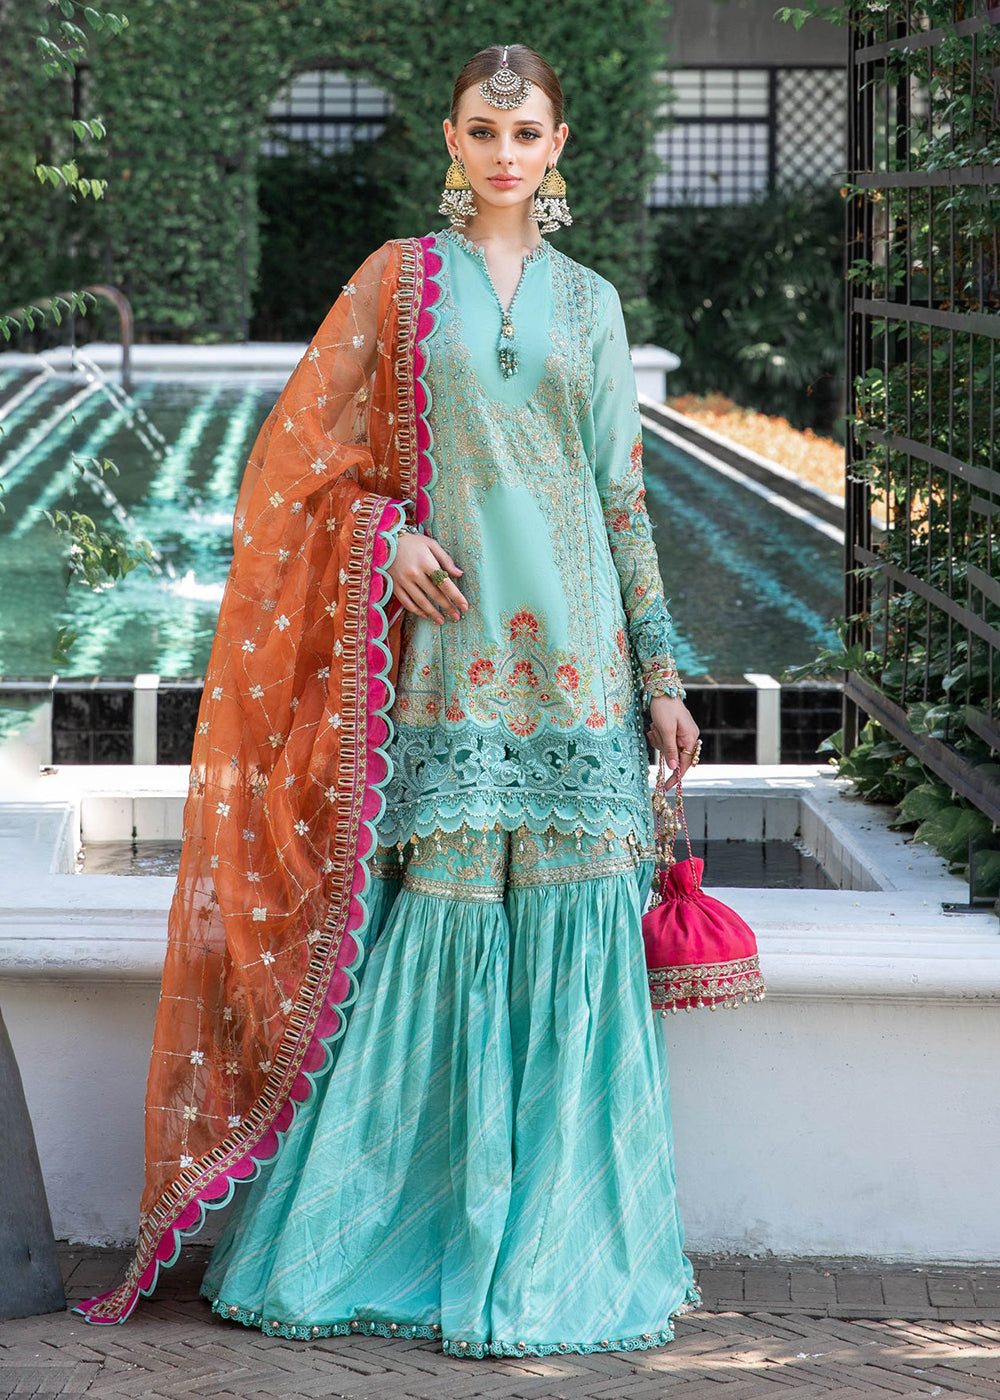 Manu punjabi suits boutique | Amritsar